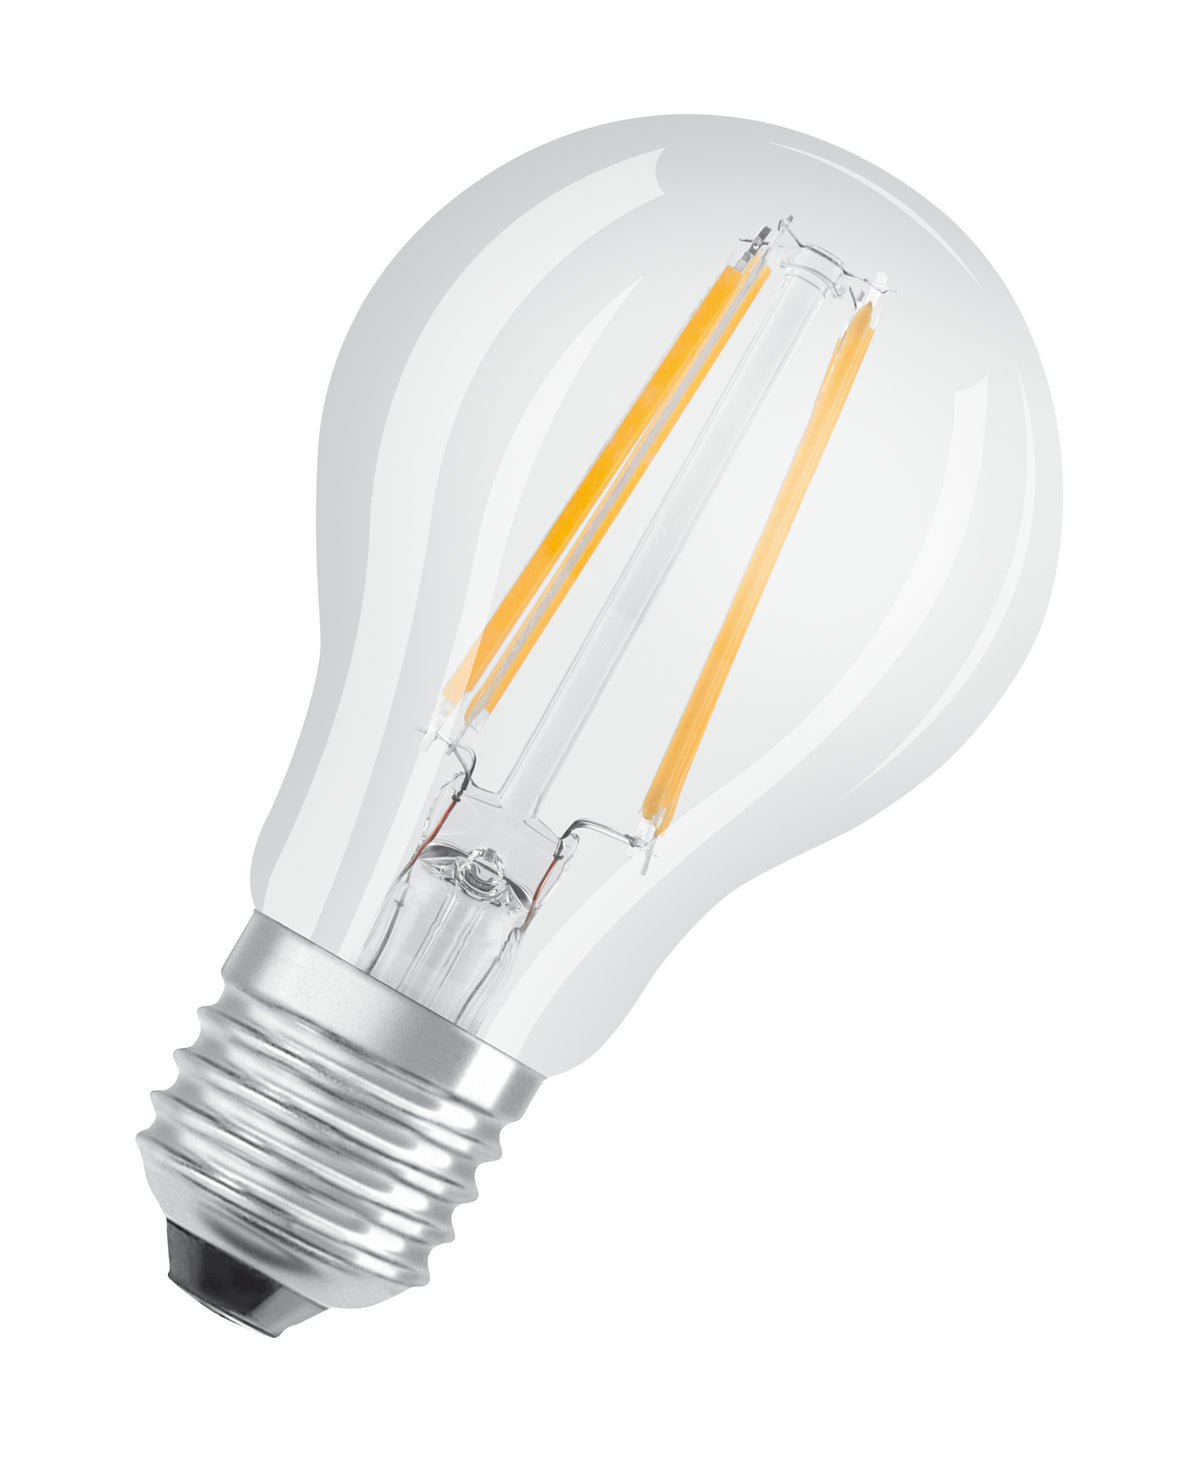 Osram ledfilamentlamp Retrofit Classic A warm wit E27 6,5W 2st.